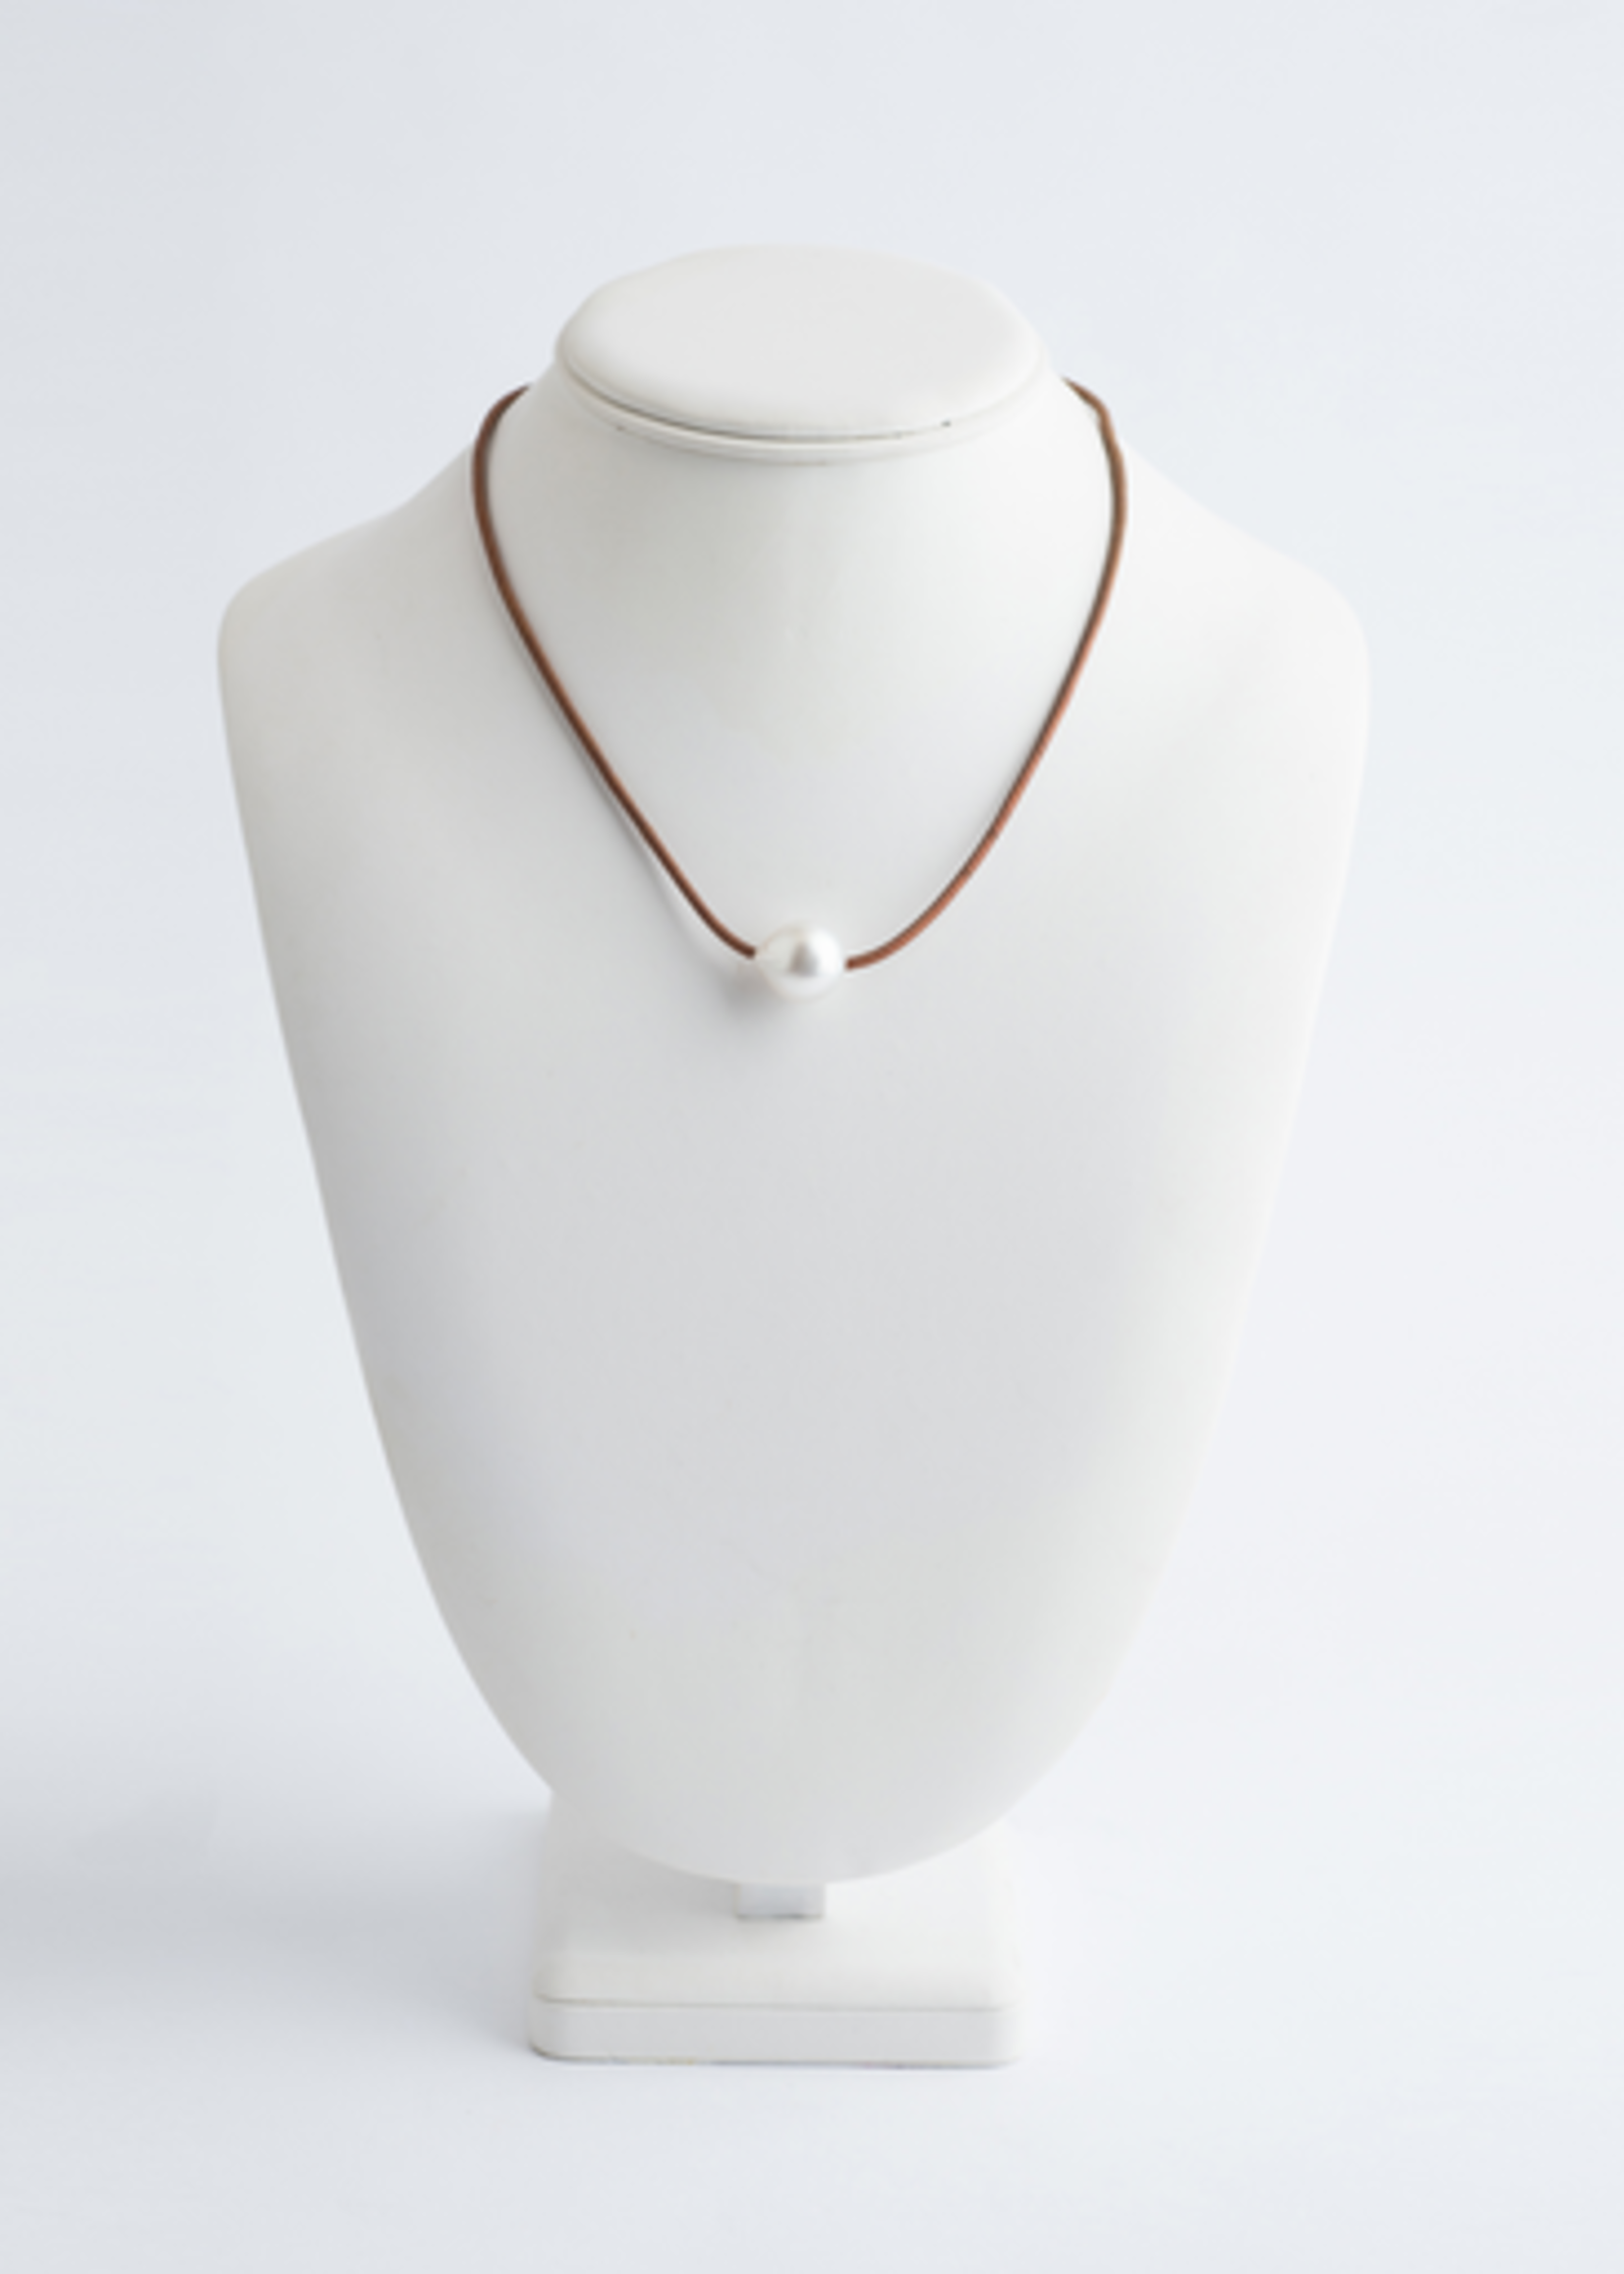 Mina Danielle White South Sea Pearl Necklace on Tan Leather Cord